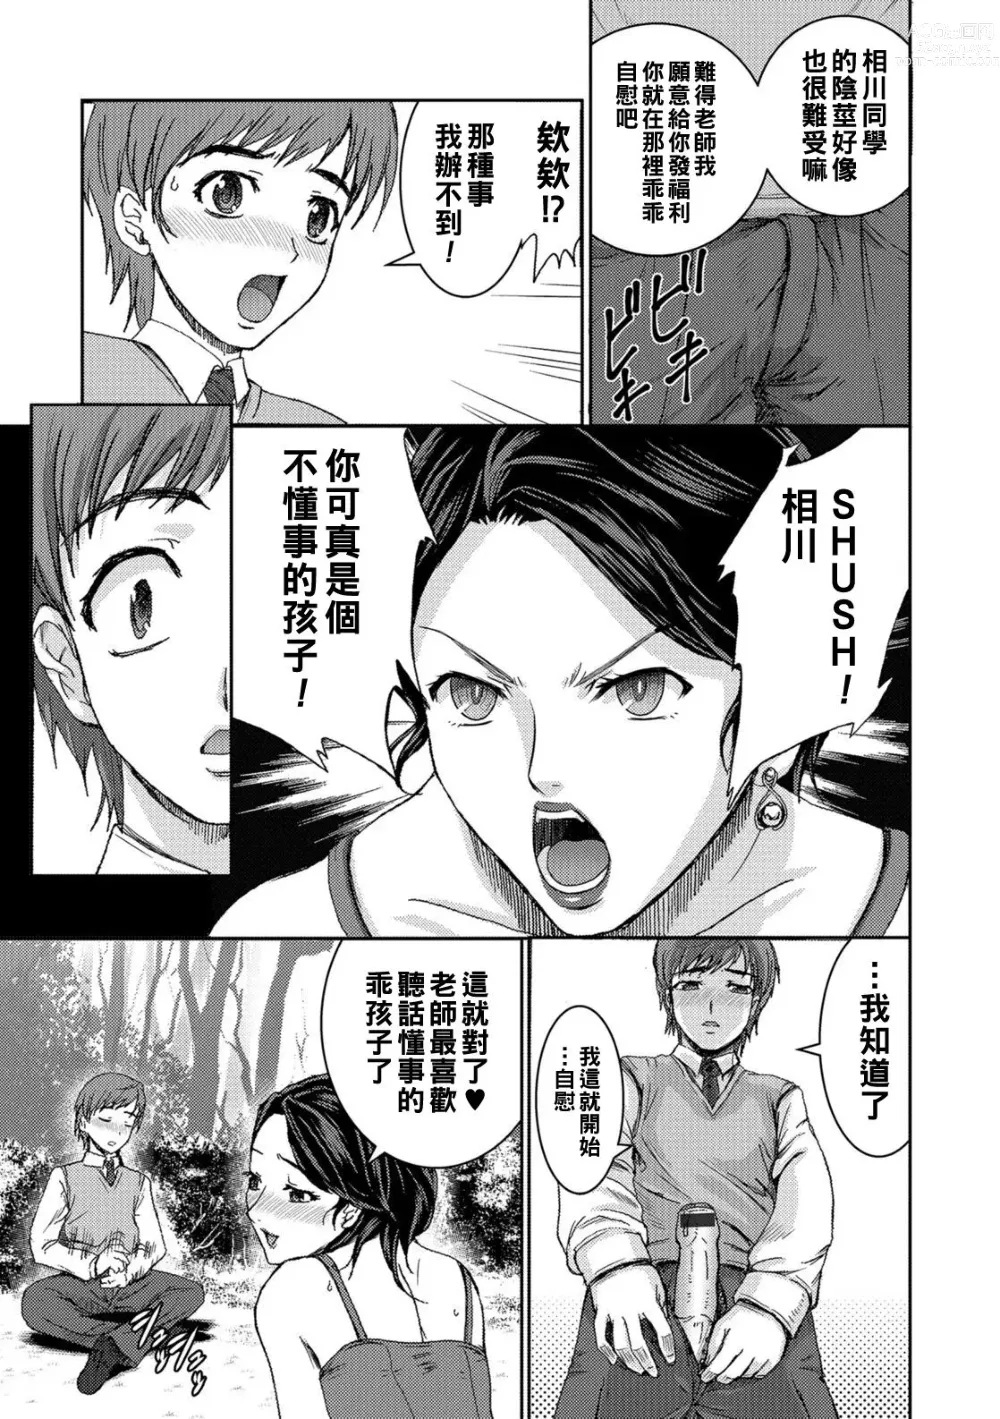 Page 13 of manga Honoguraki Mori no Reizoku -The SUIT and DOG-